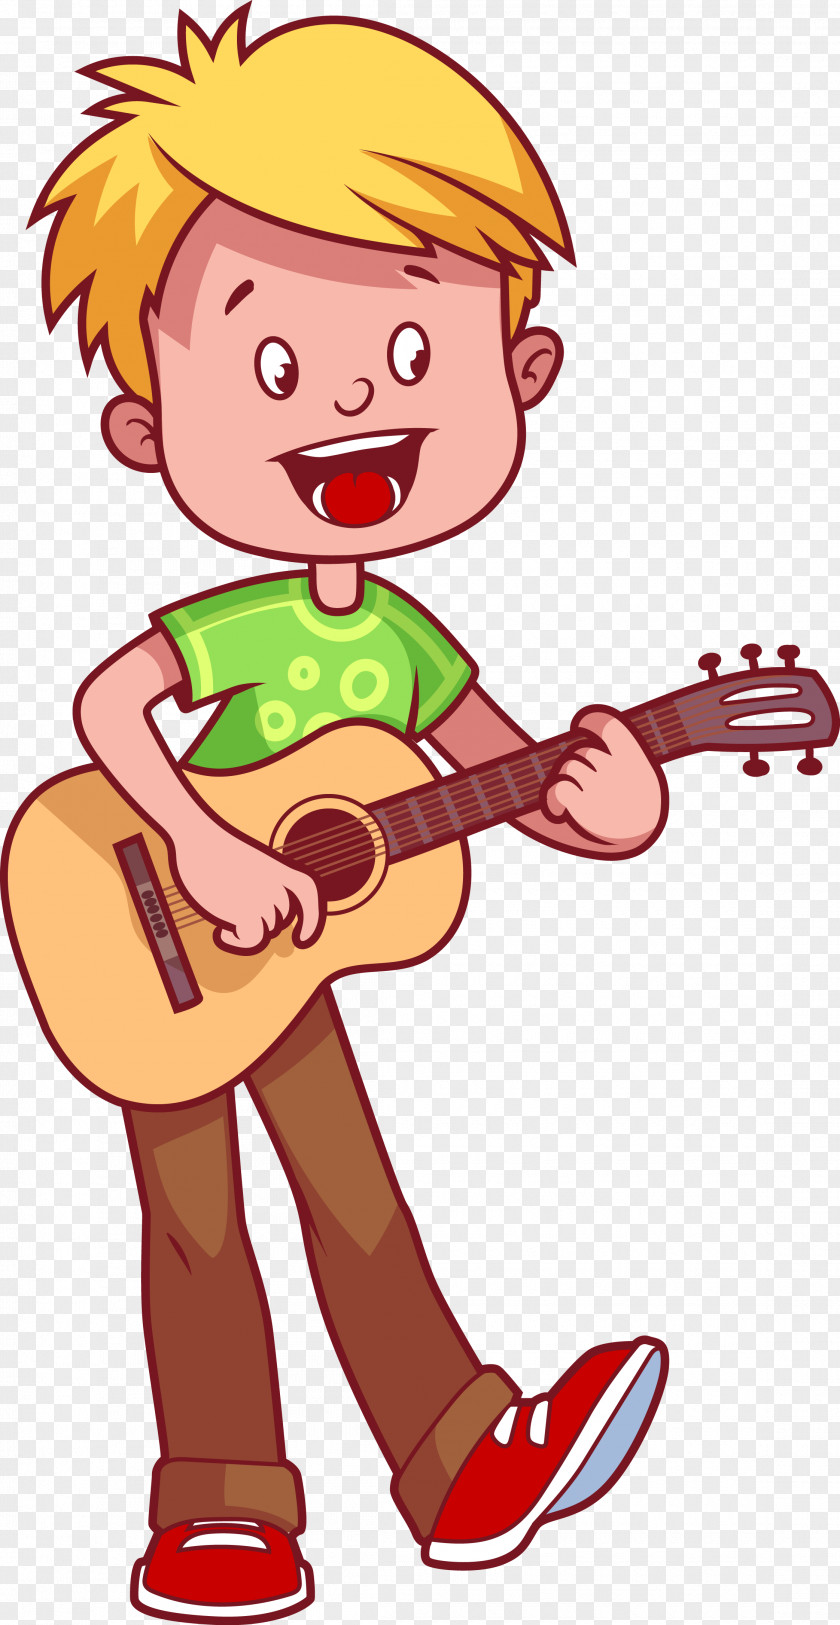 Children Playing Guitar Cartoon Illustration PNG